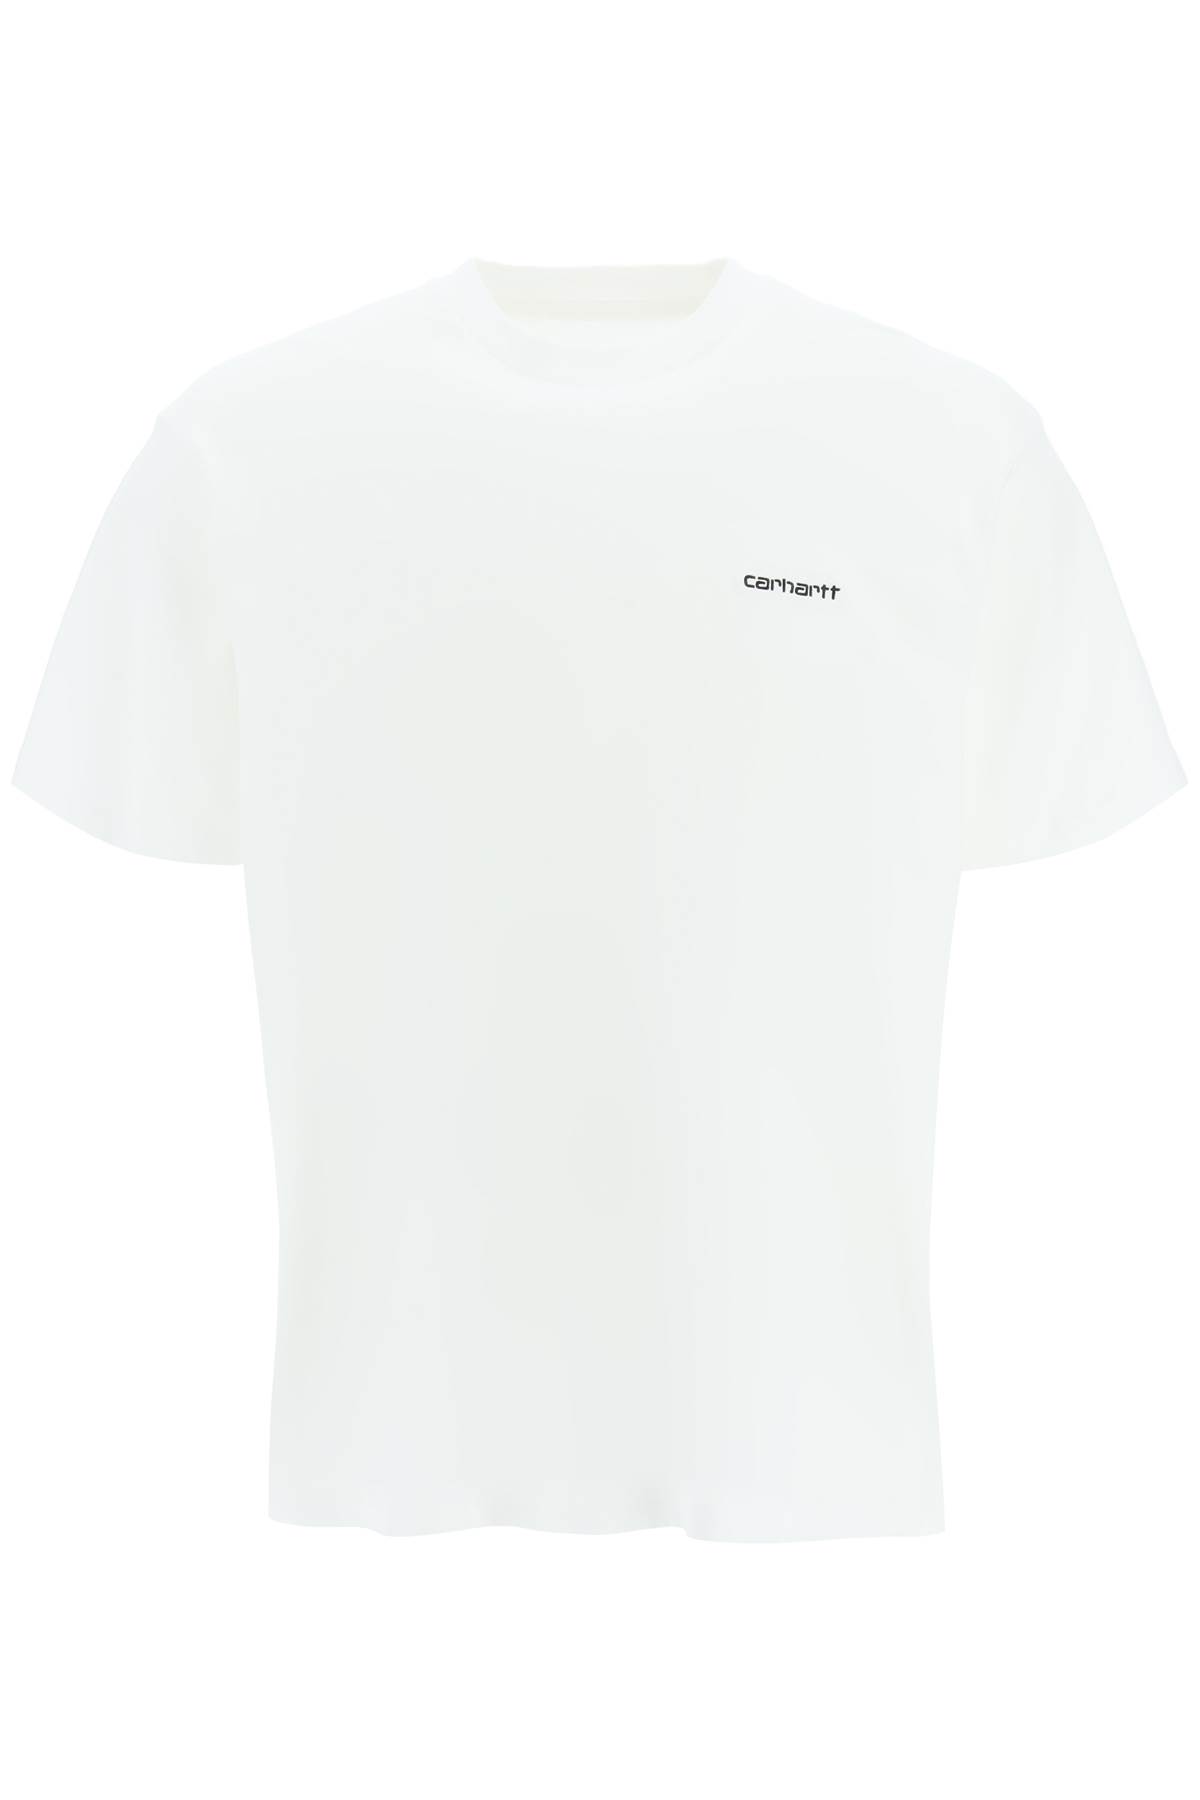 Carhartt Logo Embroidery T-shirt - unisex - Size: Extra Large